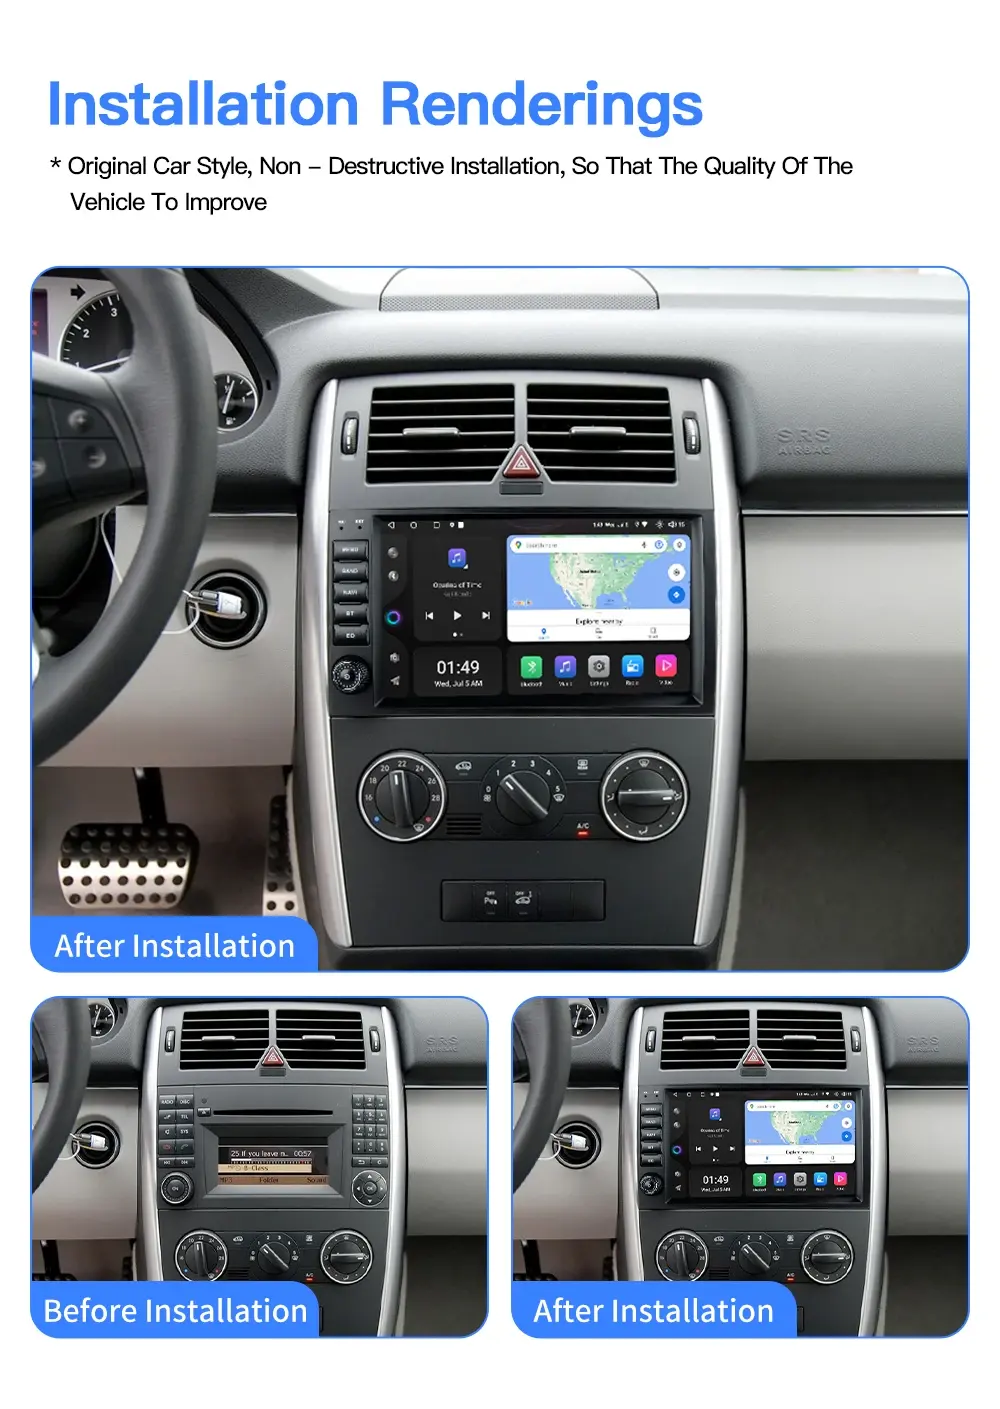 Bqcc DAB Carplay đài phát thanh stereo mirrorlink 7-inch autoradio 1 + 32GB/2 + 32GB/2 + 64GB GPS Wifi RDS cho Mercedes bens B200 2008-2017